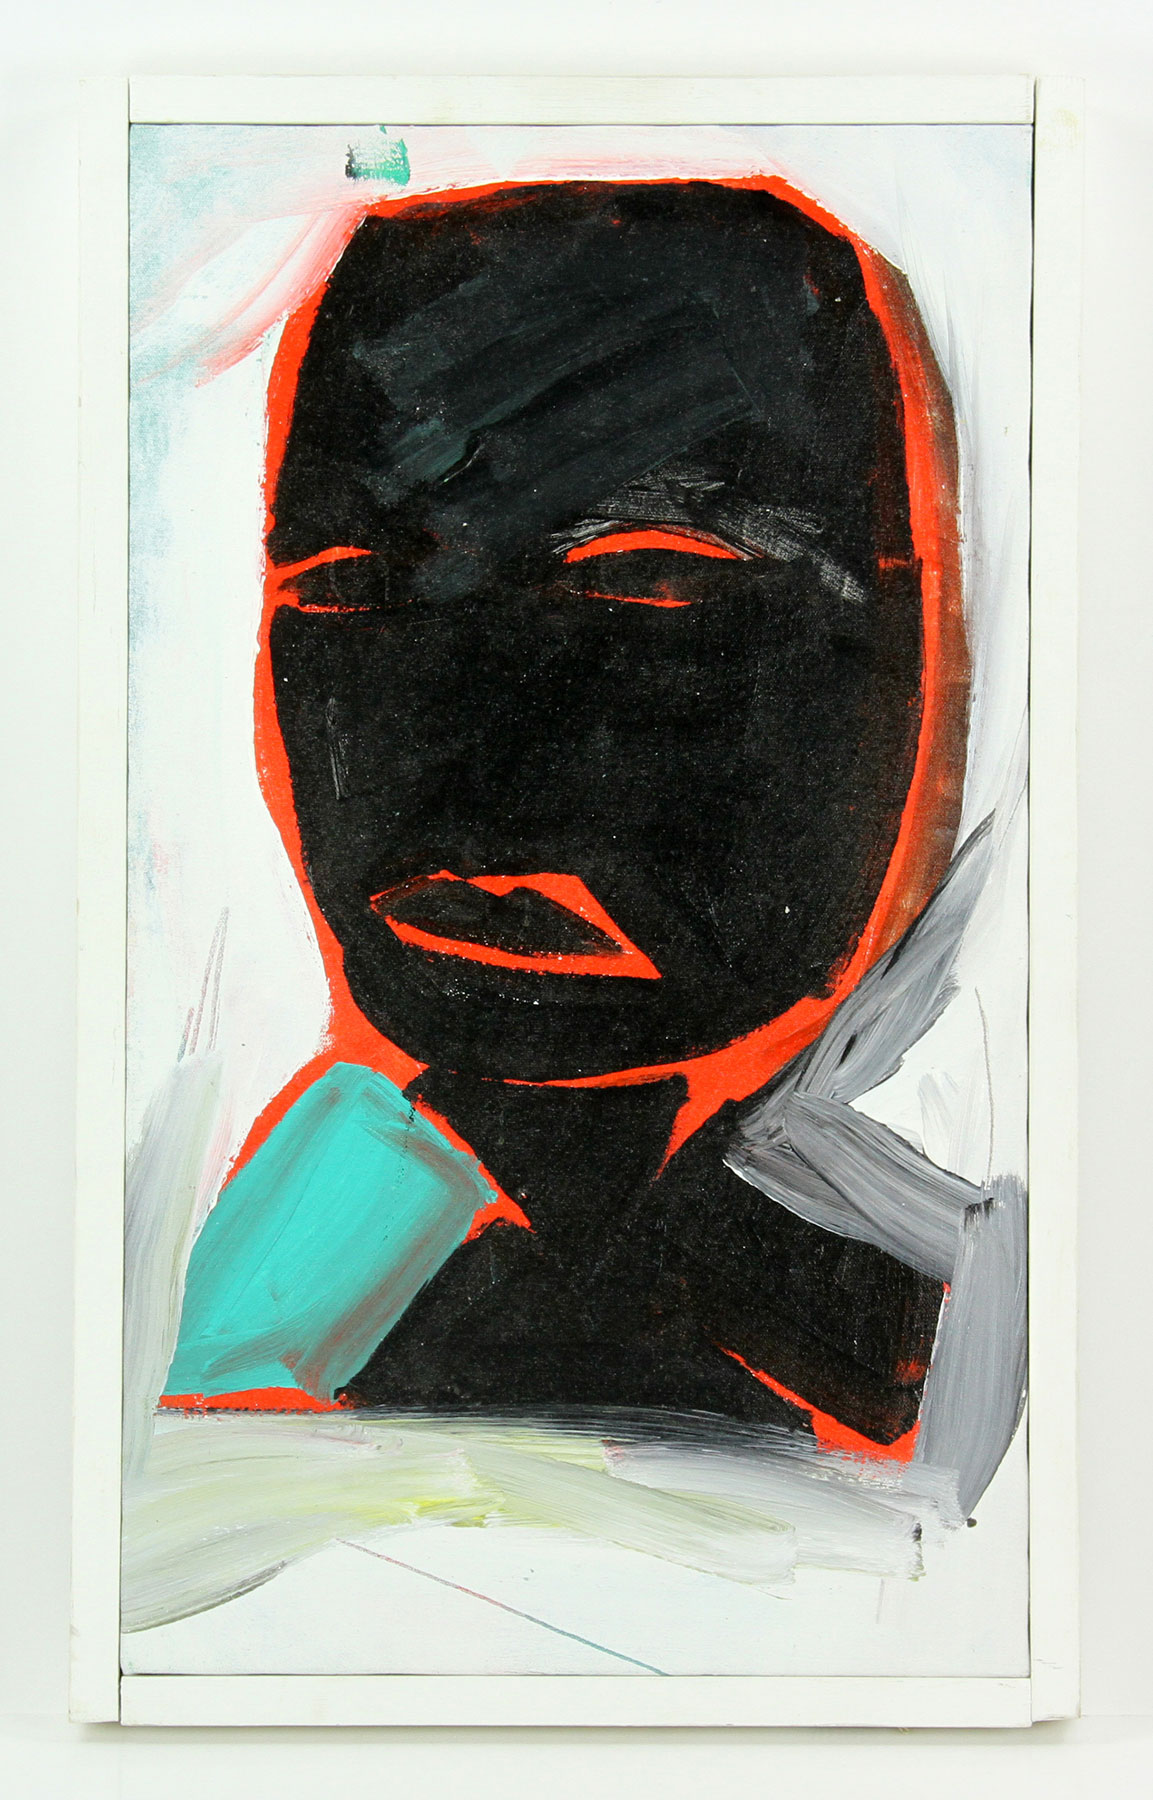 Philip Smith (American, 1952-), "Facsimile," acrylic and pencil on canvas